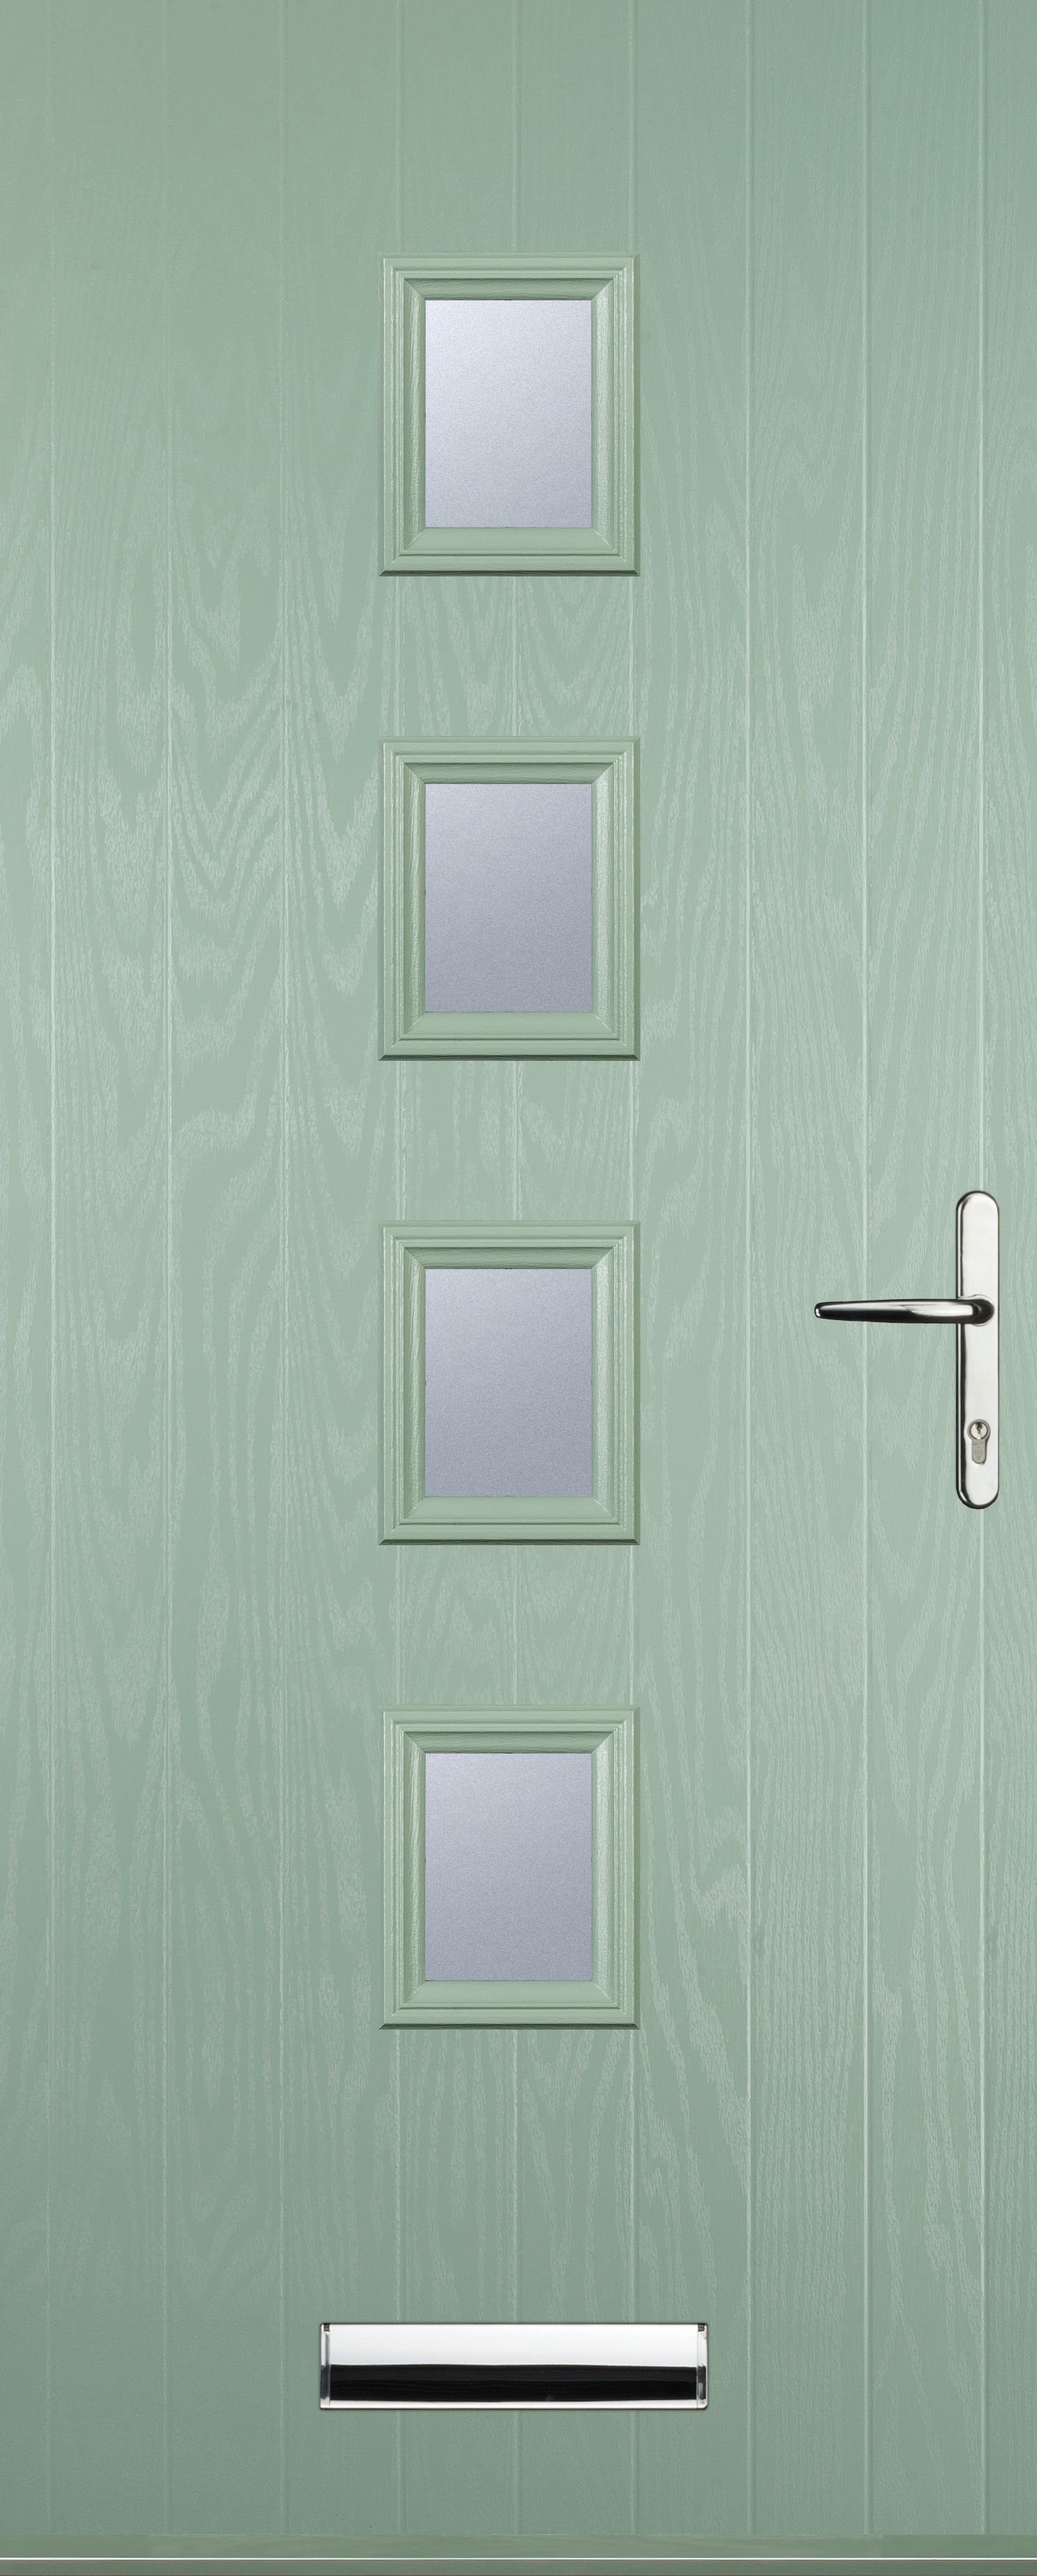 Image of Euramax 4 Square Left Hand Chartwell Green Composite Door - 880 x 2100mm